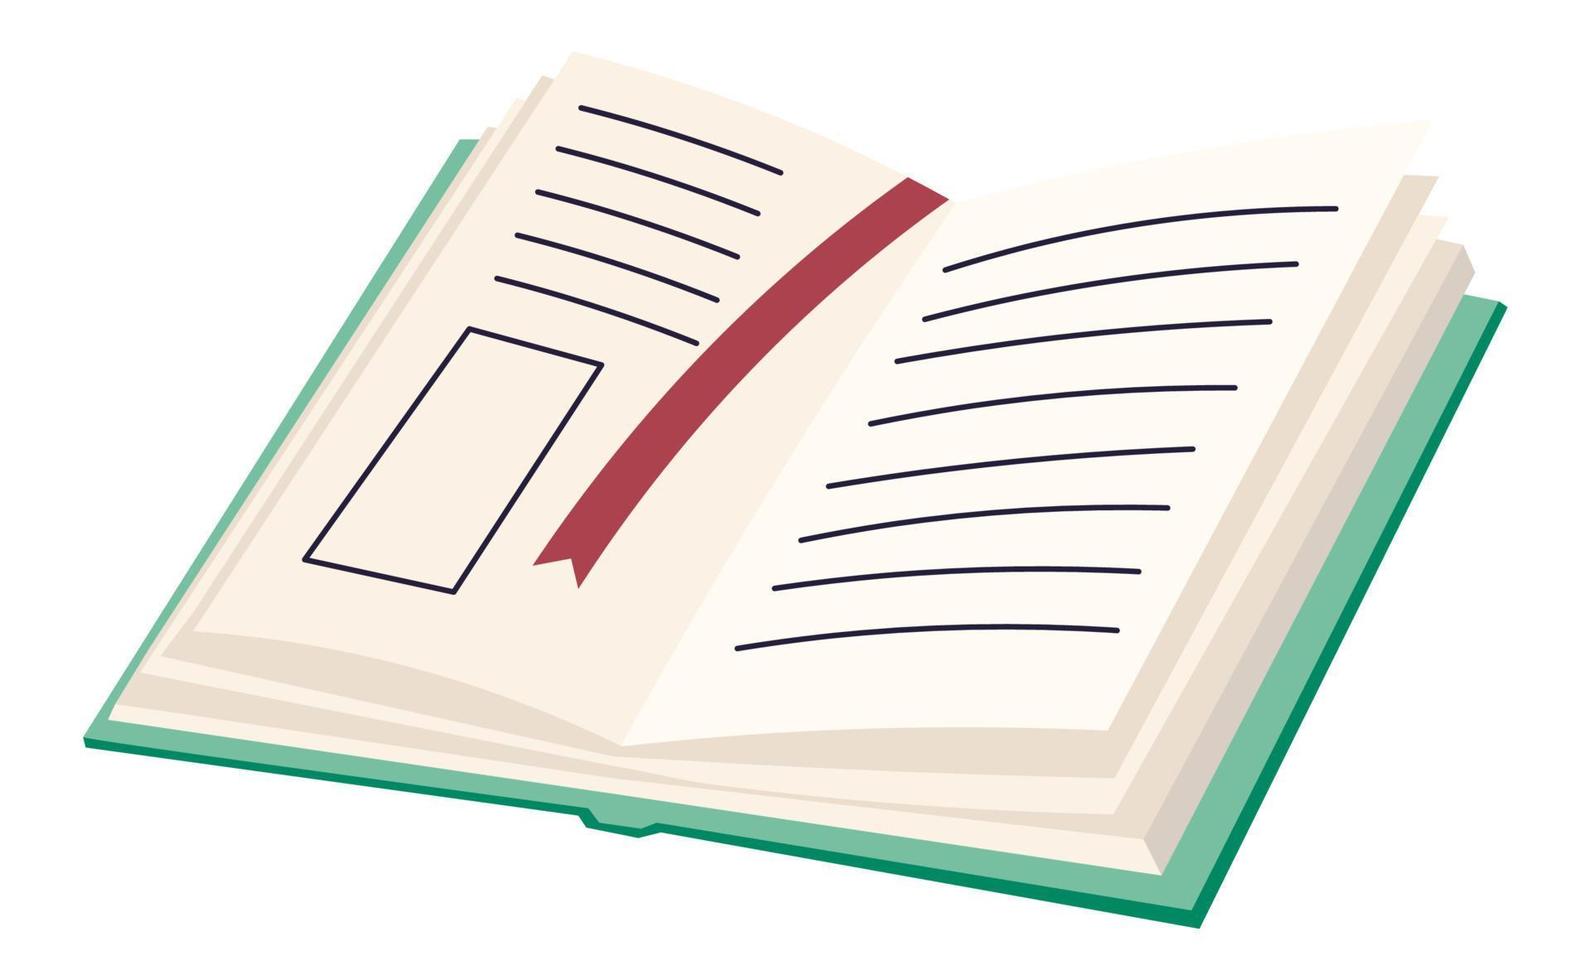 Book or journal with bookmark, school notebook vector